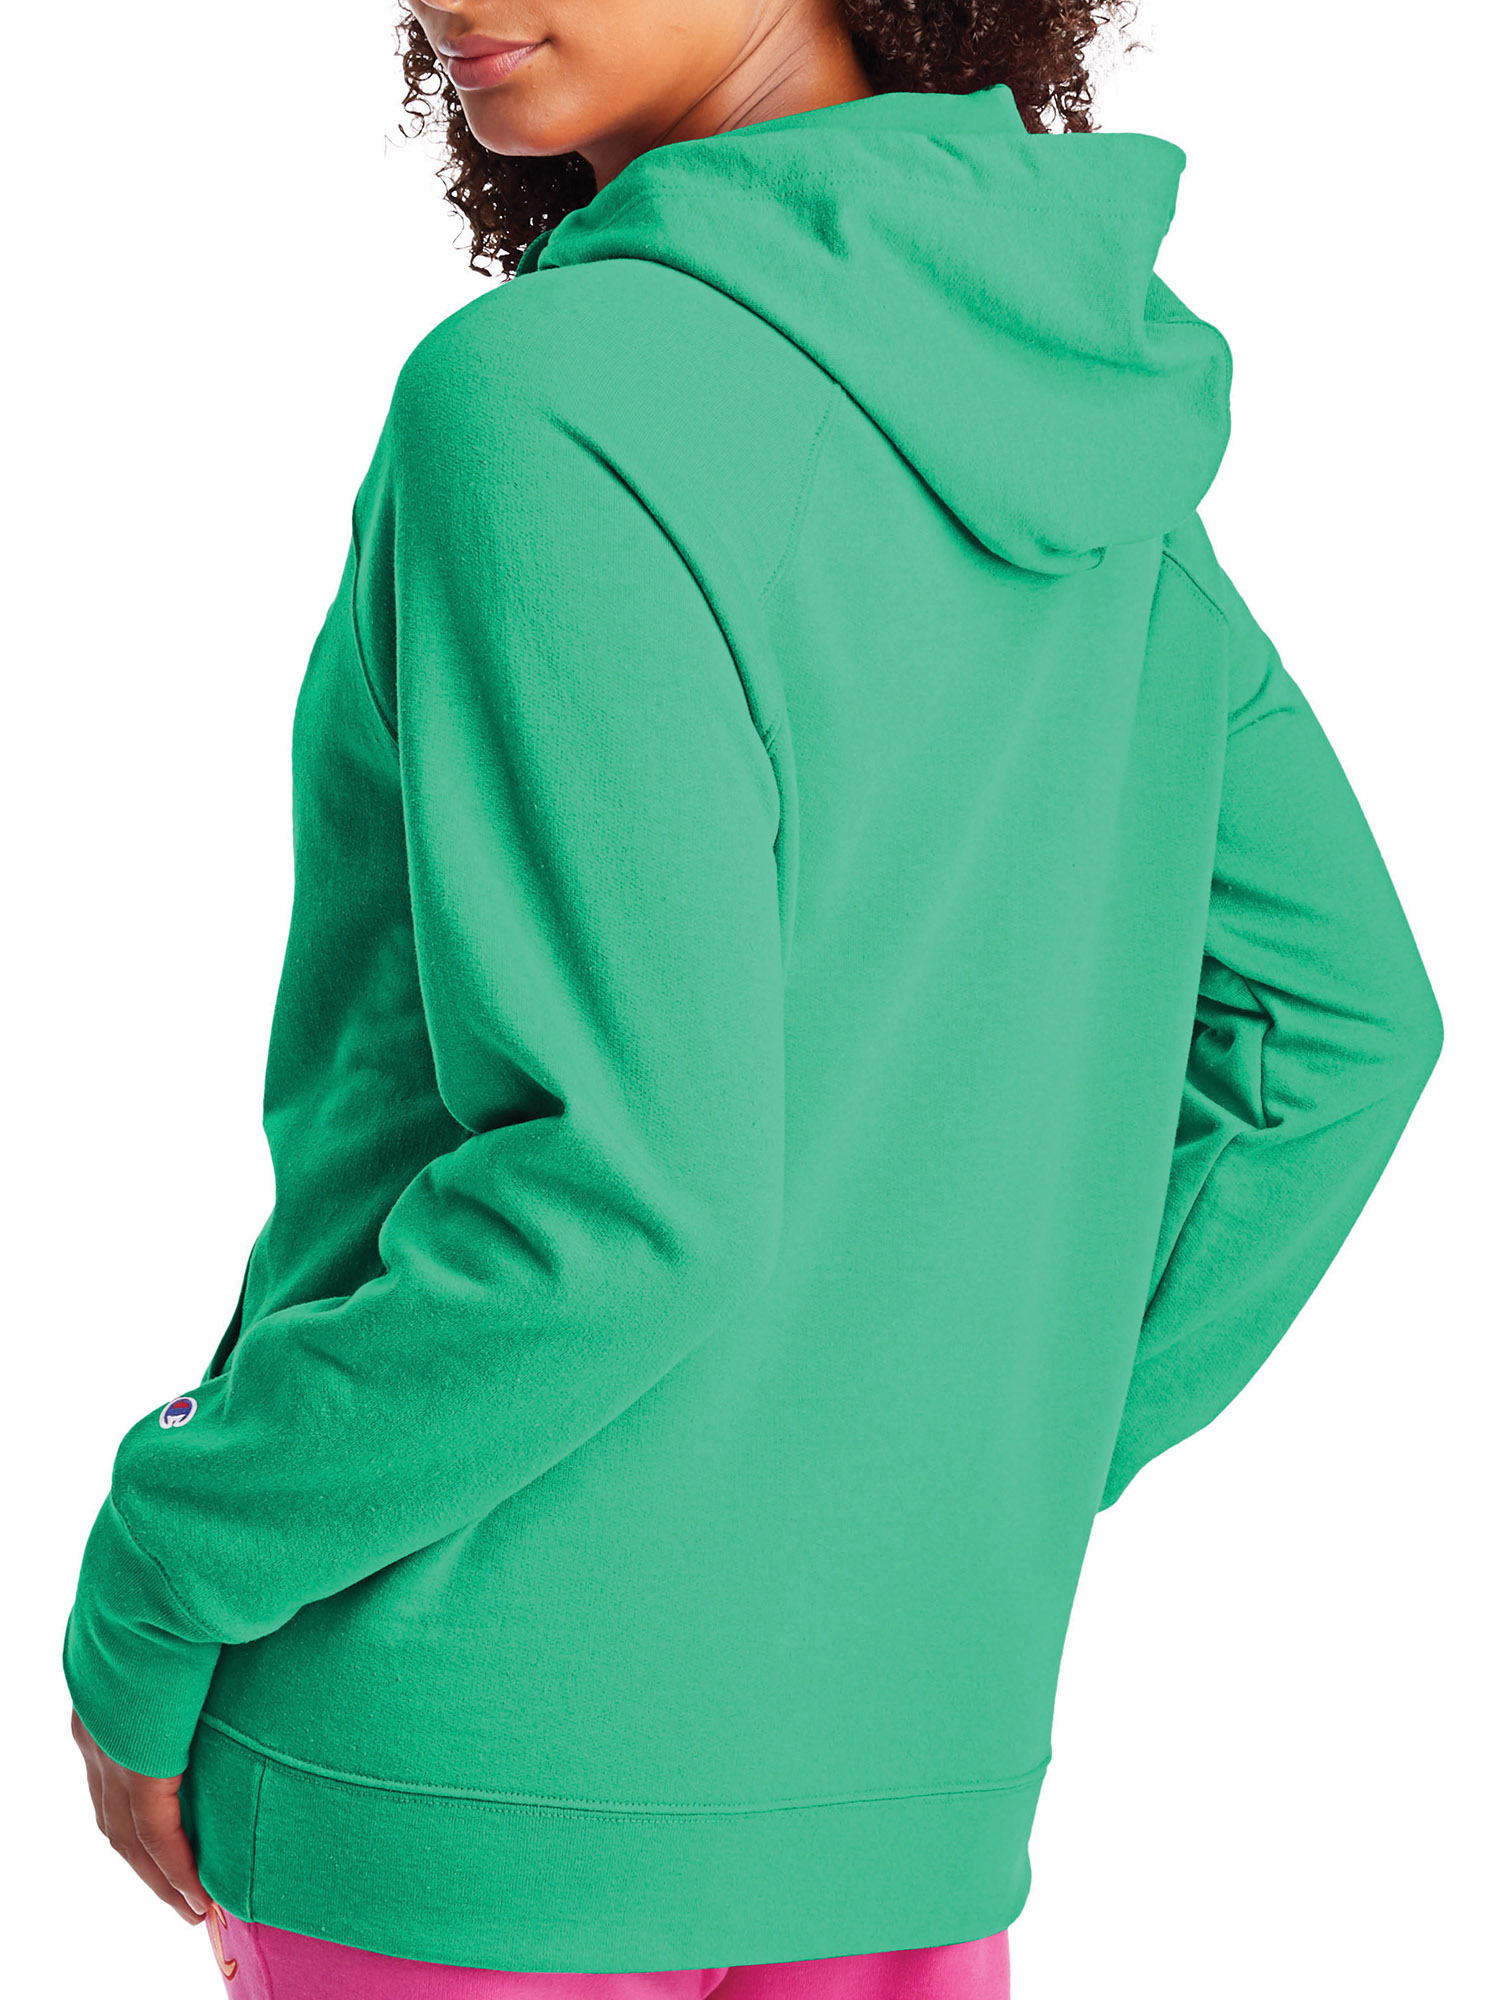 Champion Women's Athletics Powerblend Fleece Hoodie, Script Logo Green Alive XS - image 5 of 5